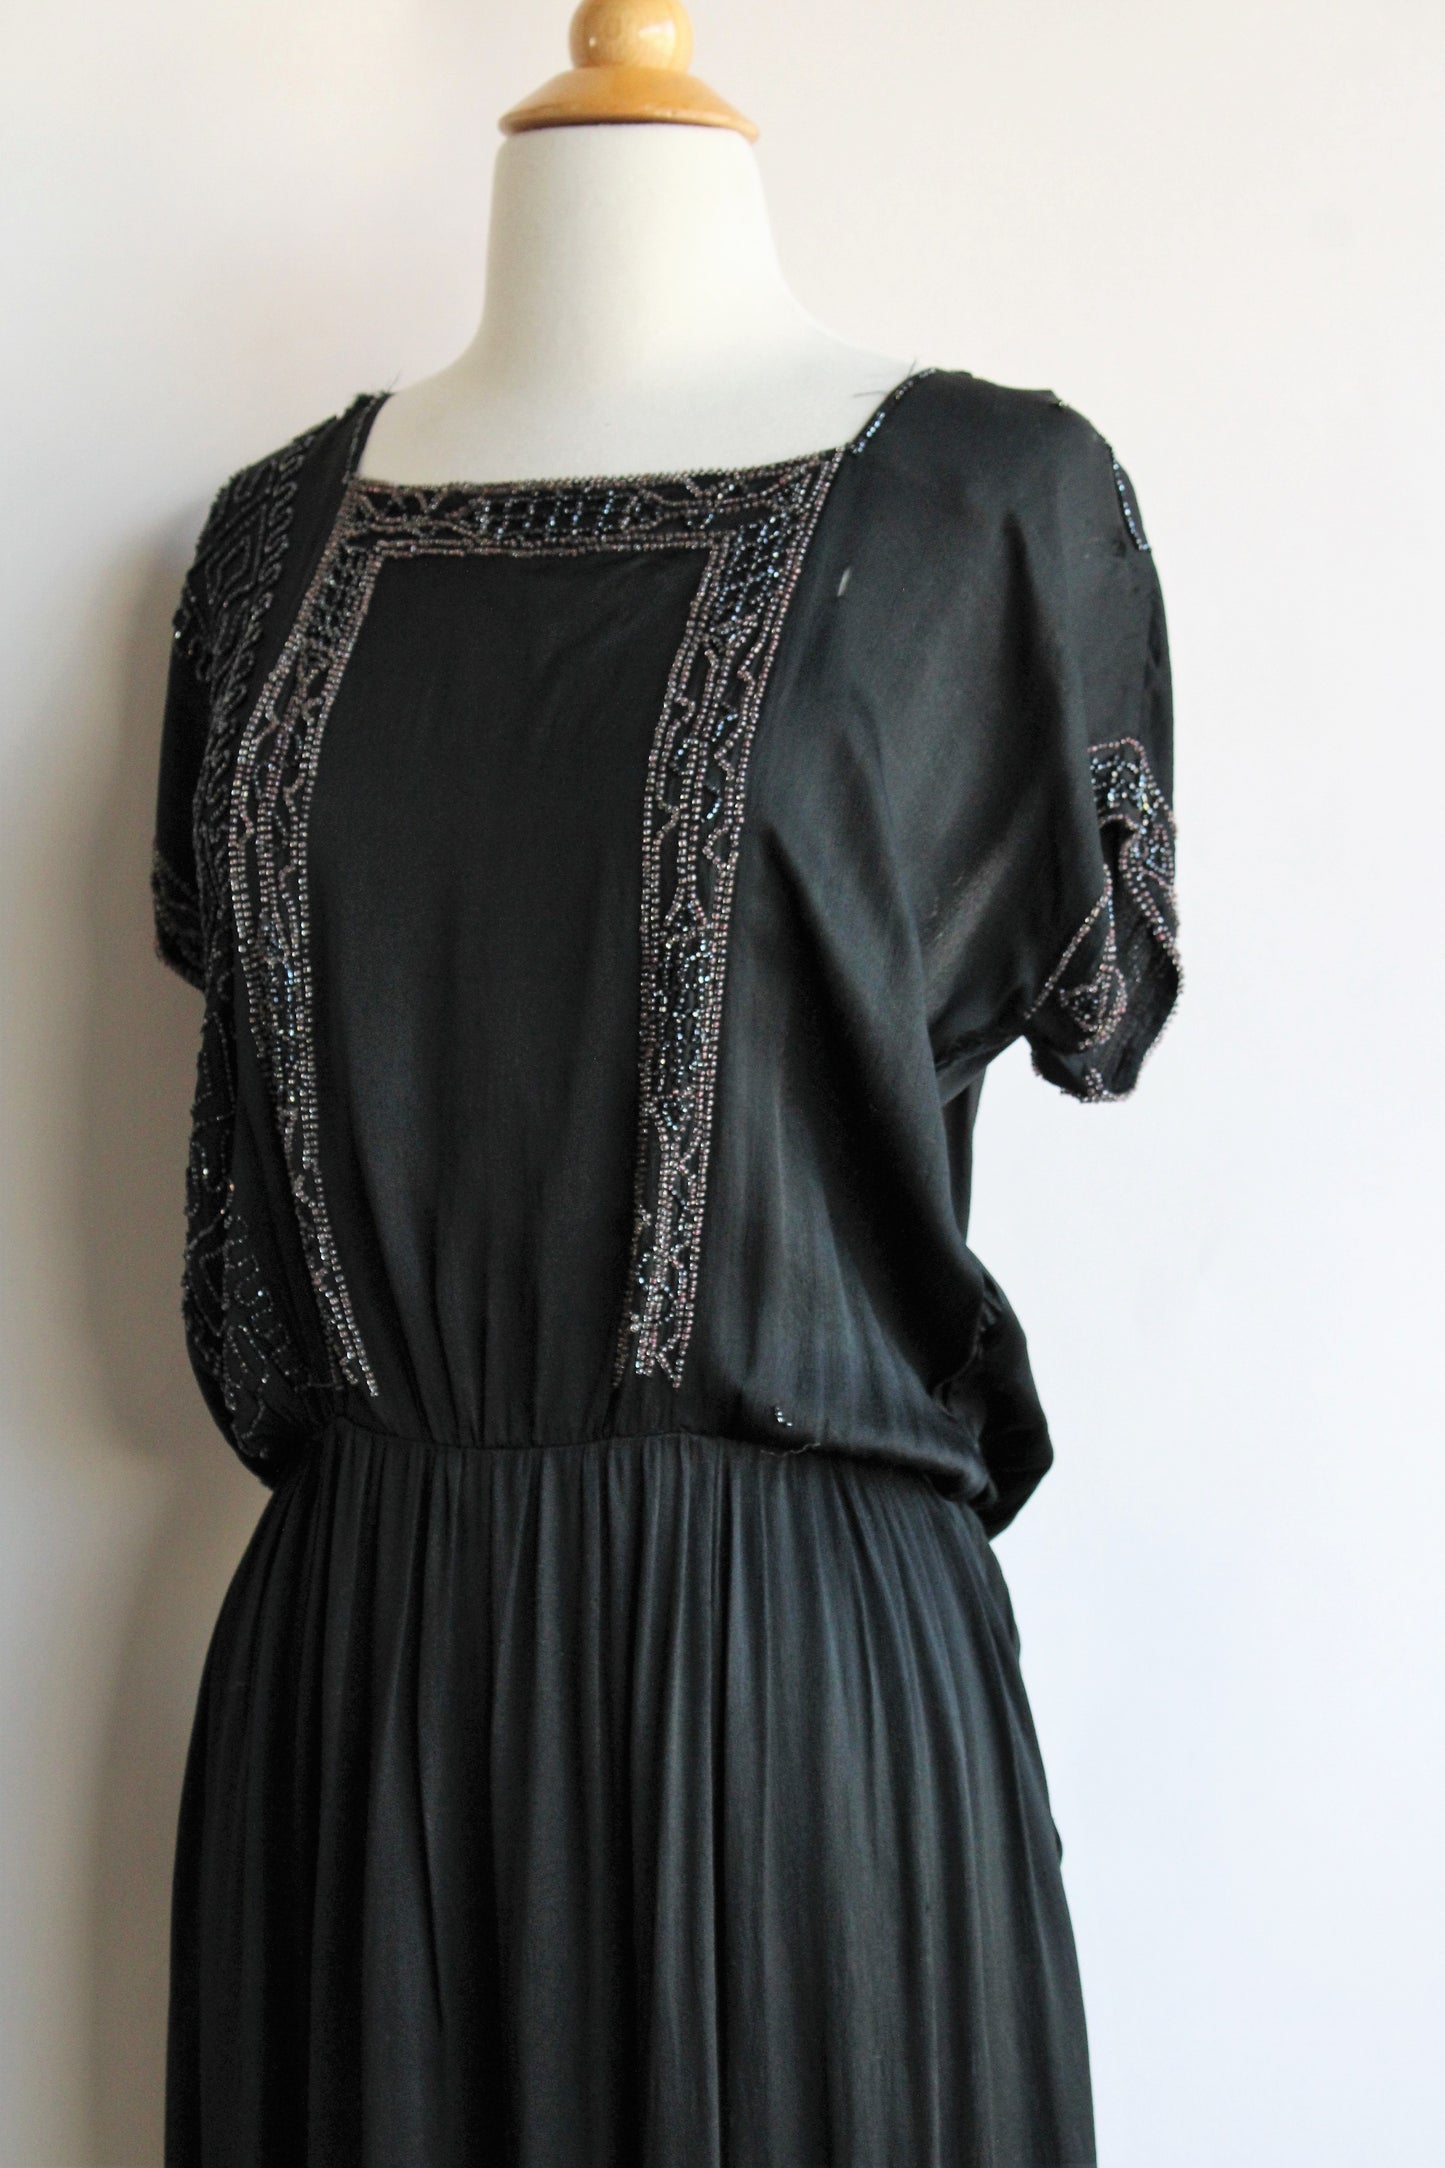 Vintage 1920s Black Silk Dress with Jet Beading